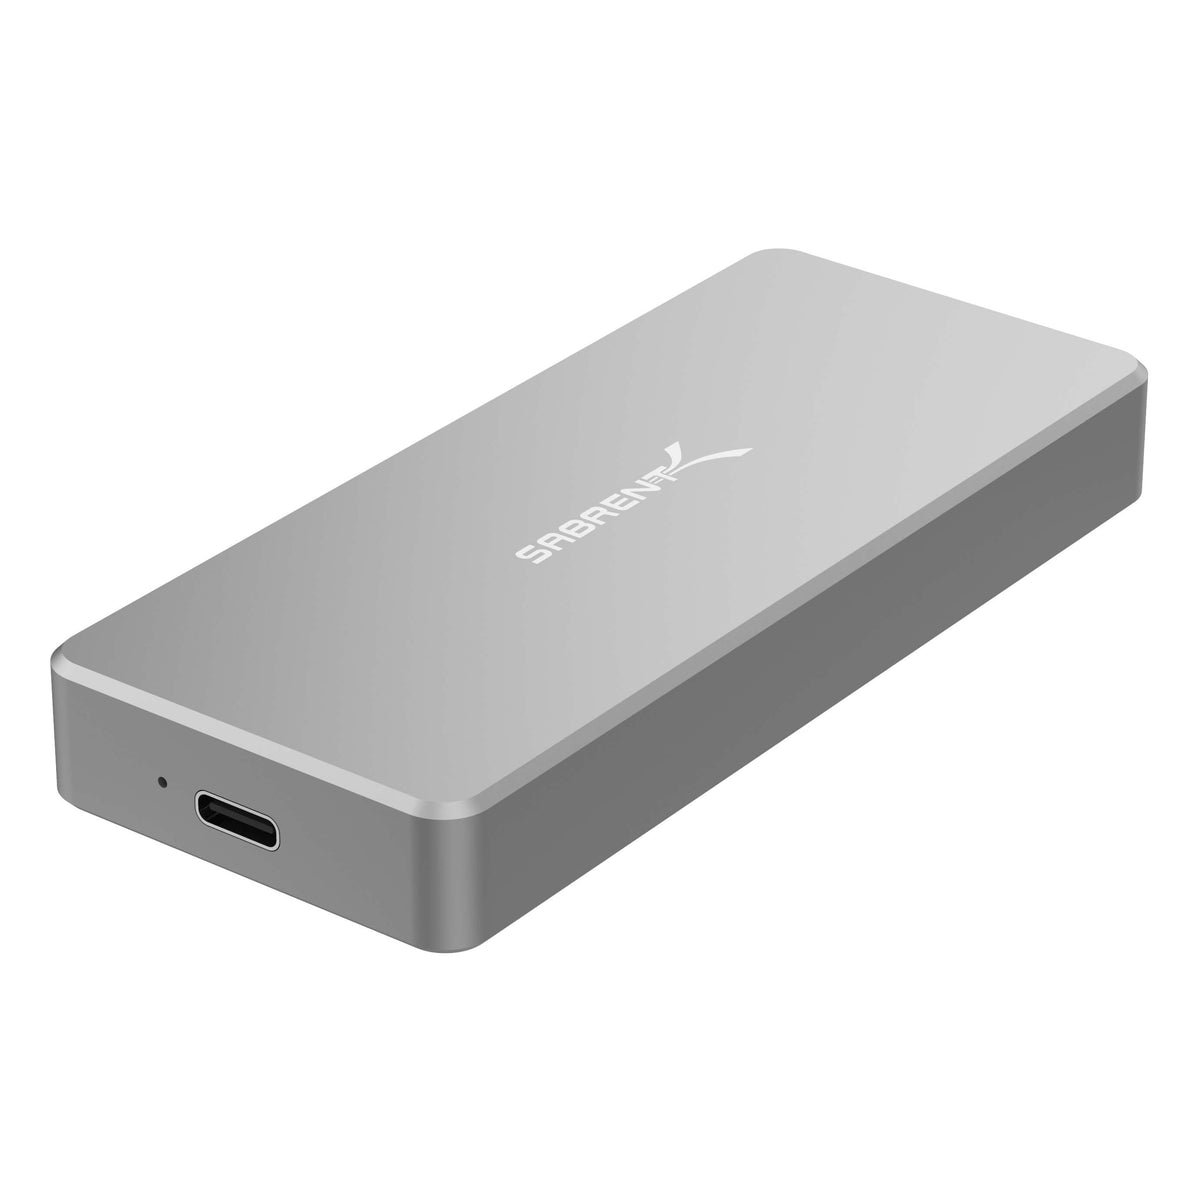 256GB NVMe USB 3.1 External Aluminum SSD